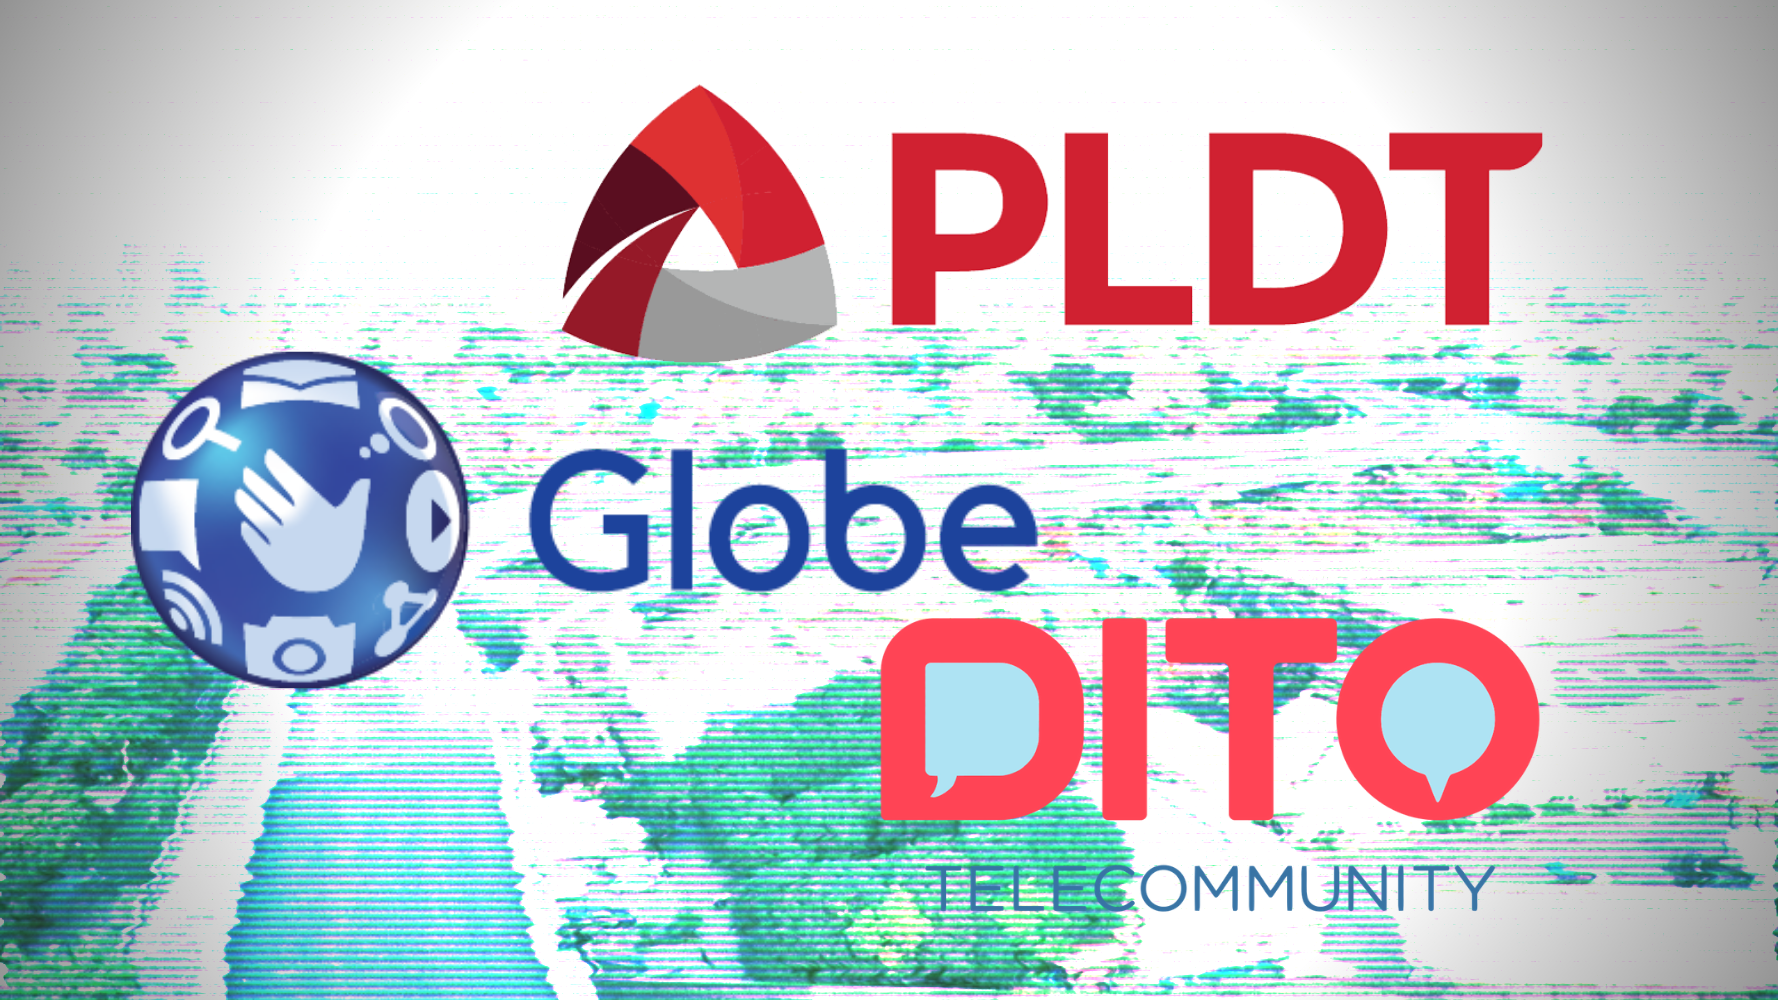 Three Philippine Telcos PLDT, Globe, and DITO